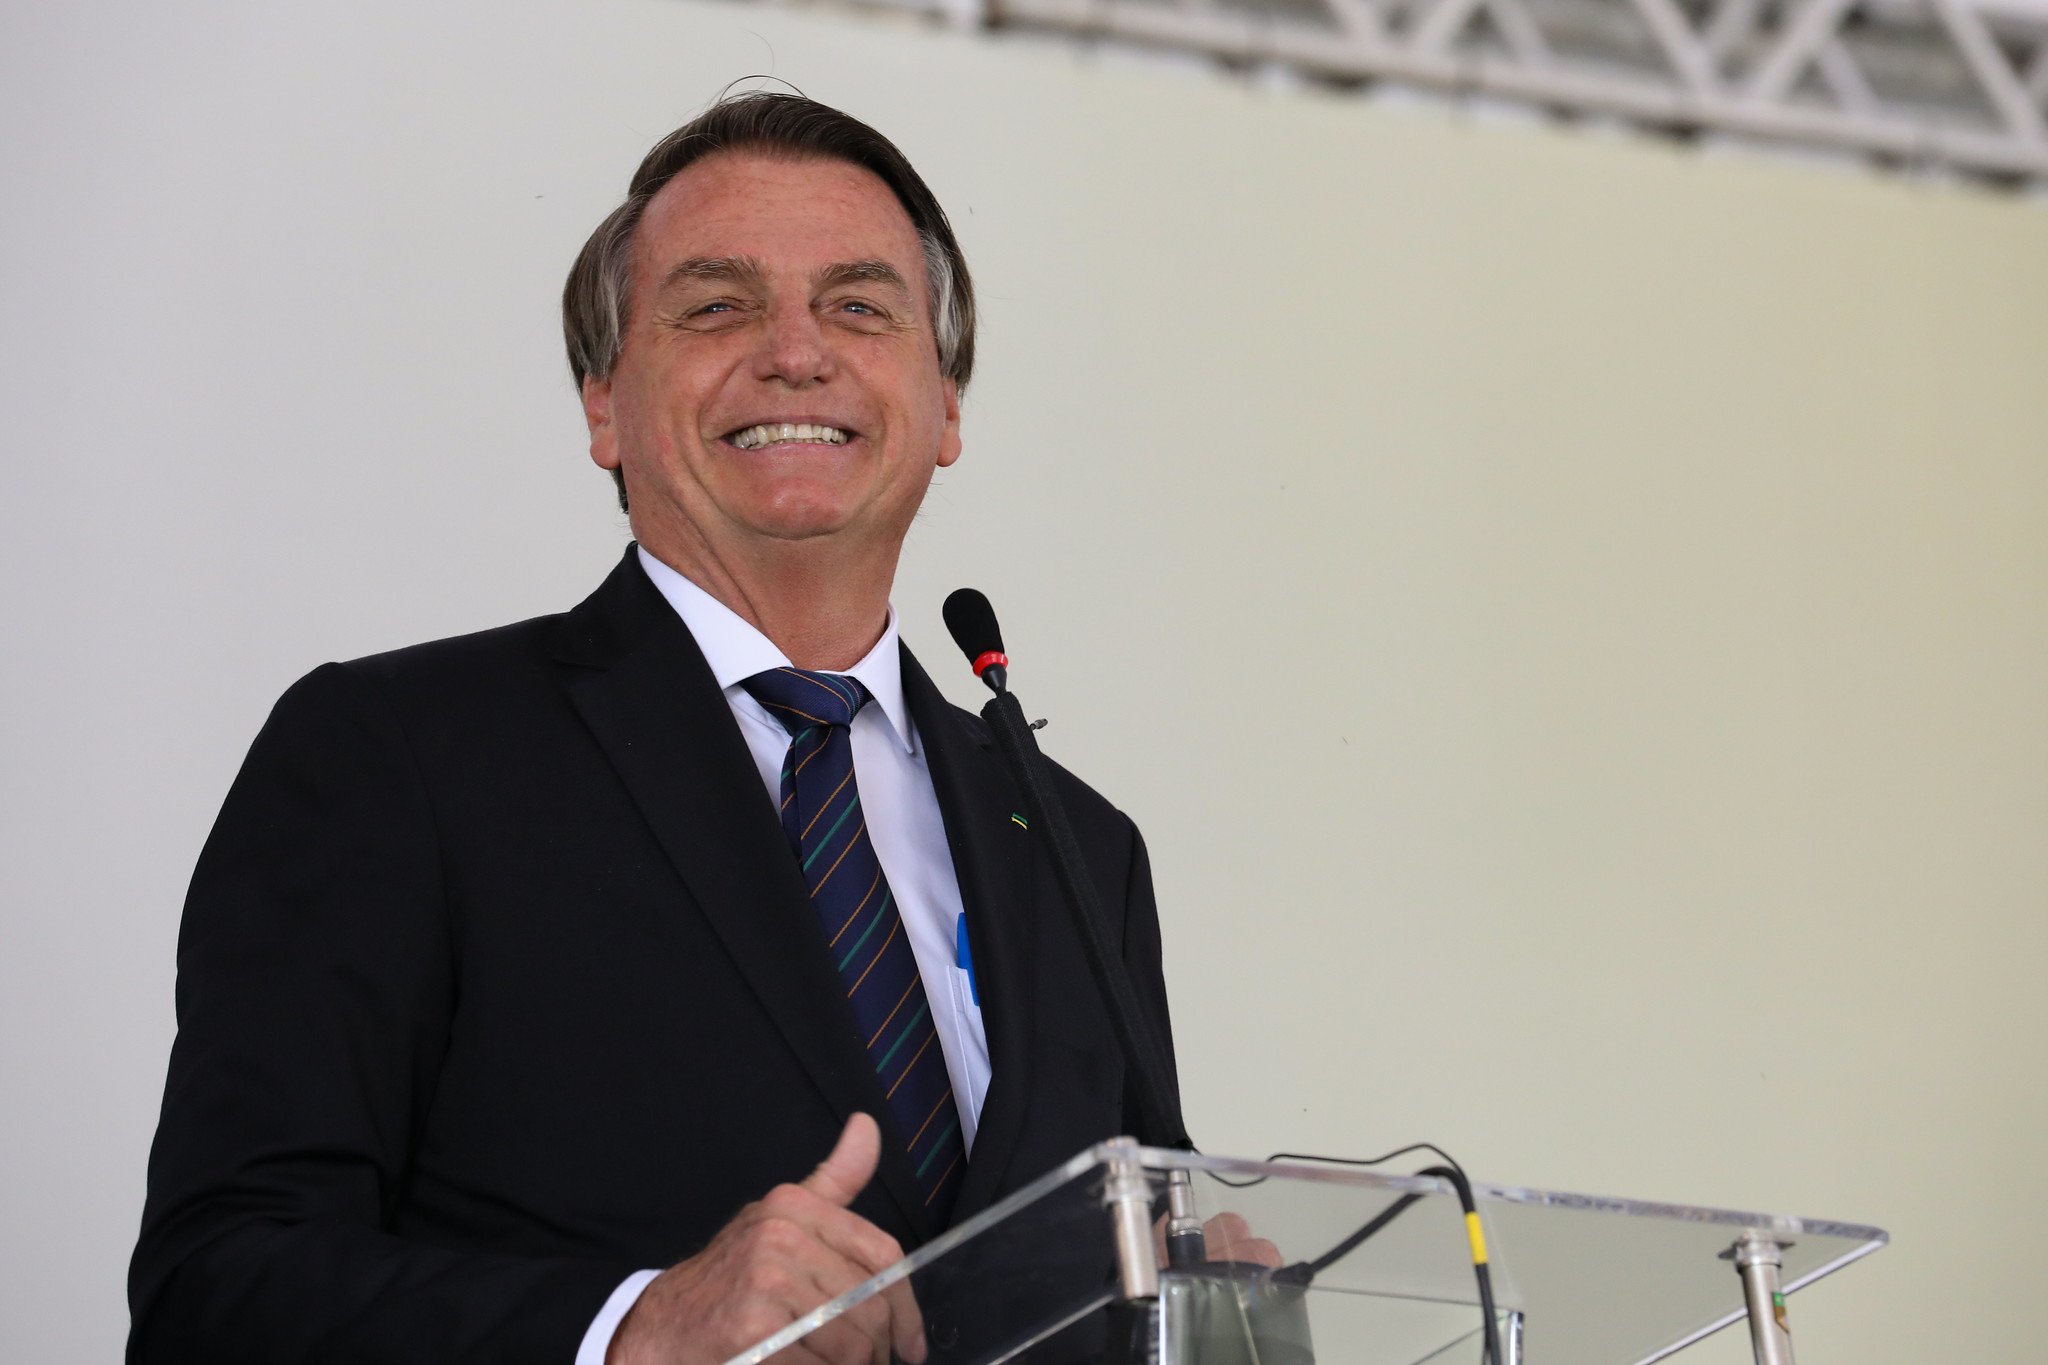  “Hugs from Captain Jair Bolsonaro” – Brazilian President Celebrates Johnny Depp’s Victory